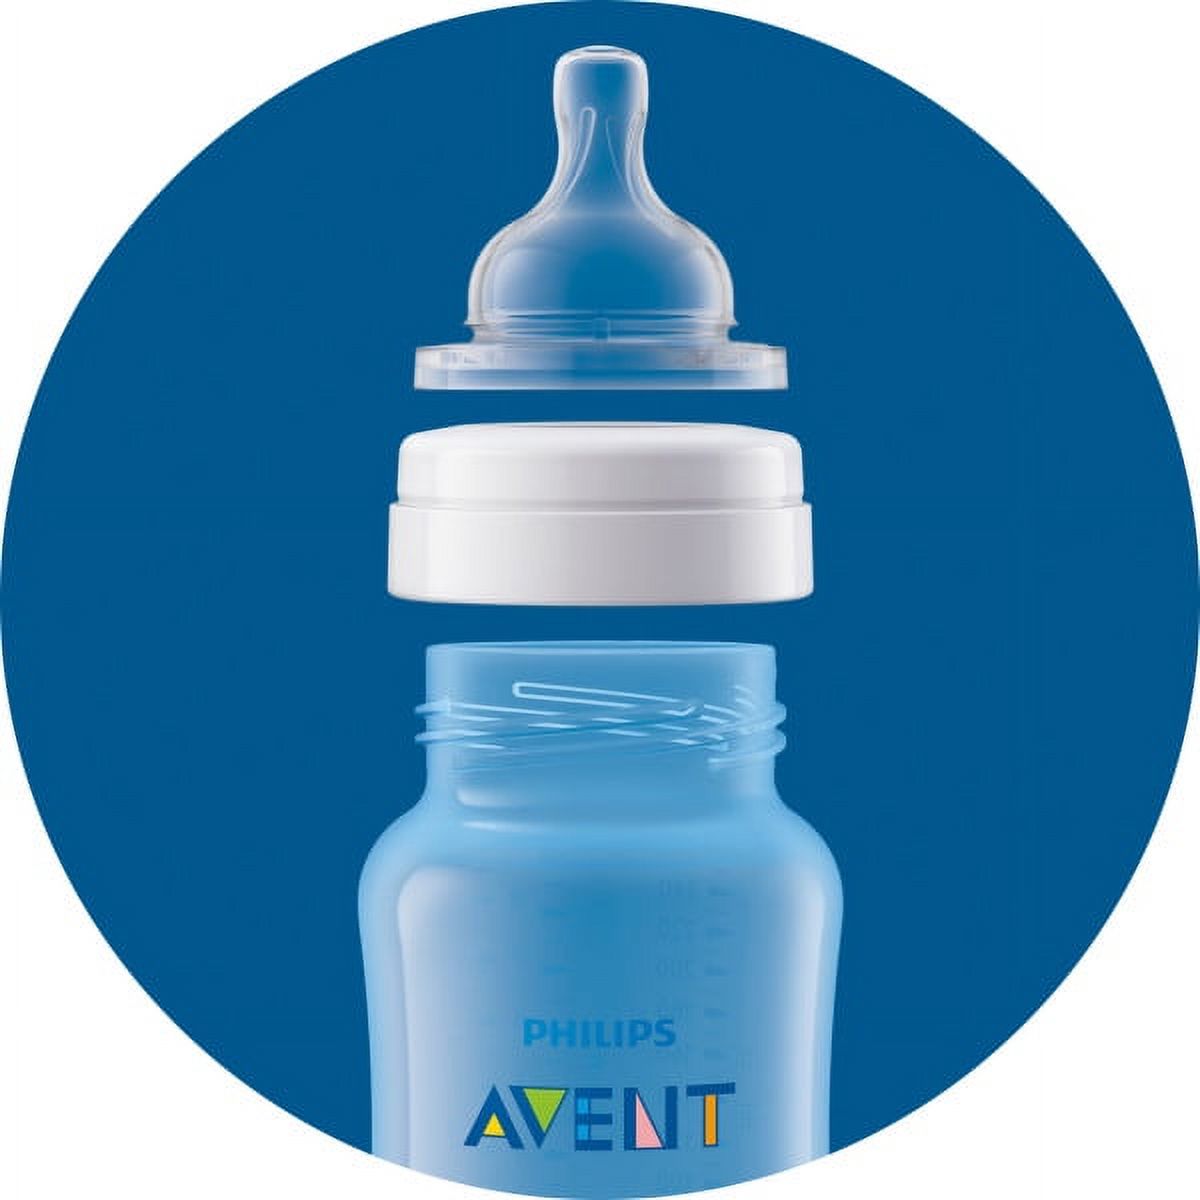 Philips Avent Anti-colic bottle BPA Free Baby Bottle Starter Gift Set, Blue, SCD393/03 - image 5 of 14